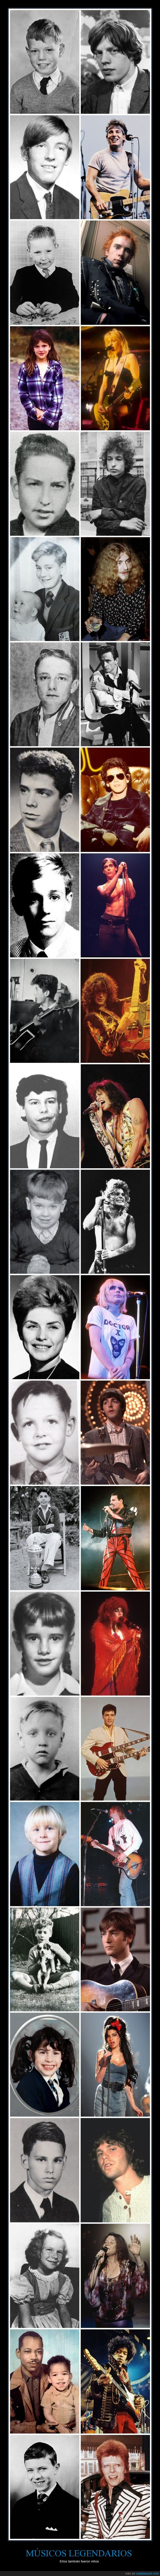 Amy Winehouse,David Bowie,Elvis,Freddy Mercury,Janis Joplin,Jimi Hendrix,Johnny Cash,Kurt Cobain,músico,niño,Ozzy,Steve Tyler